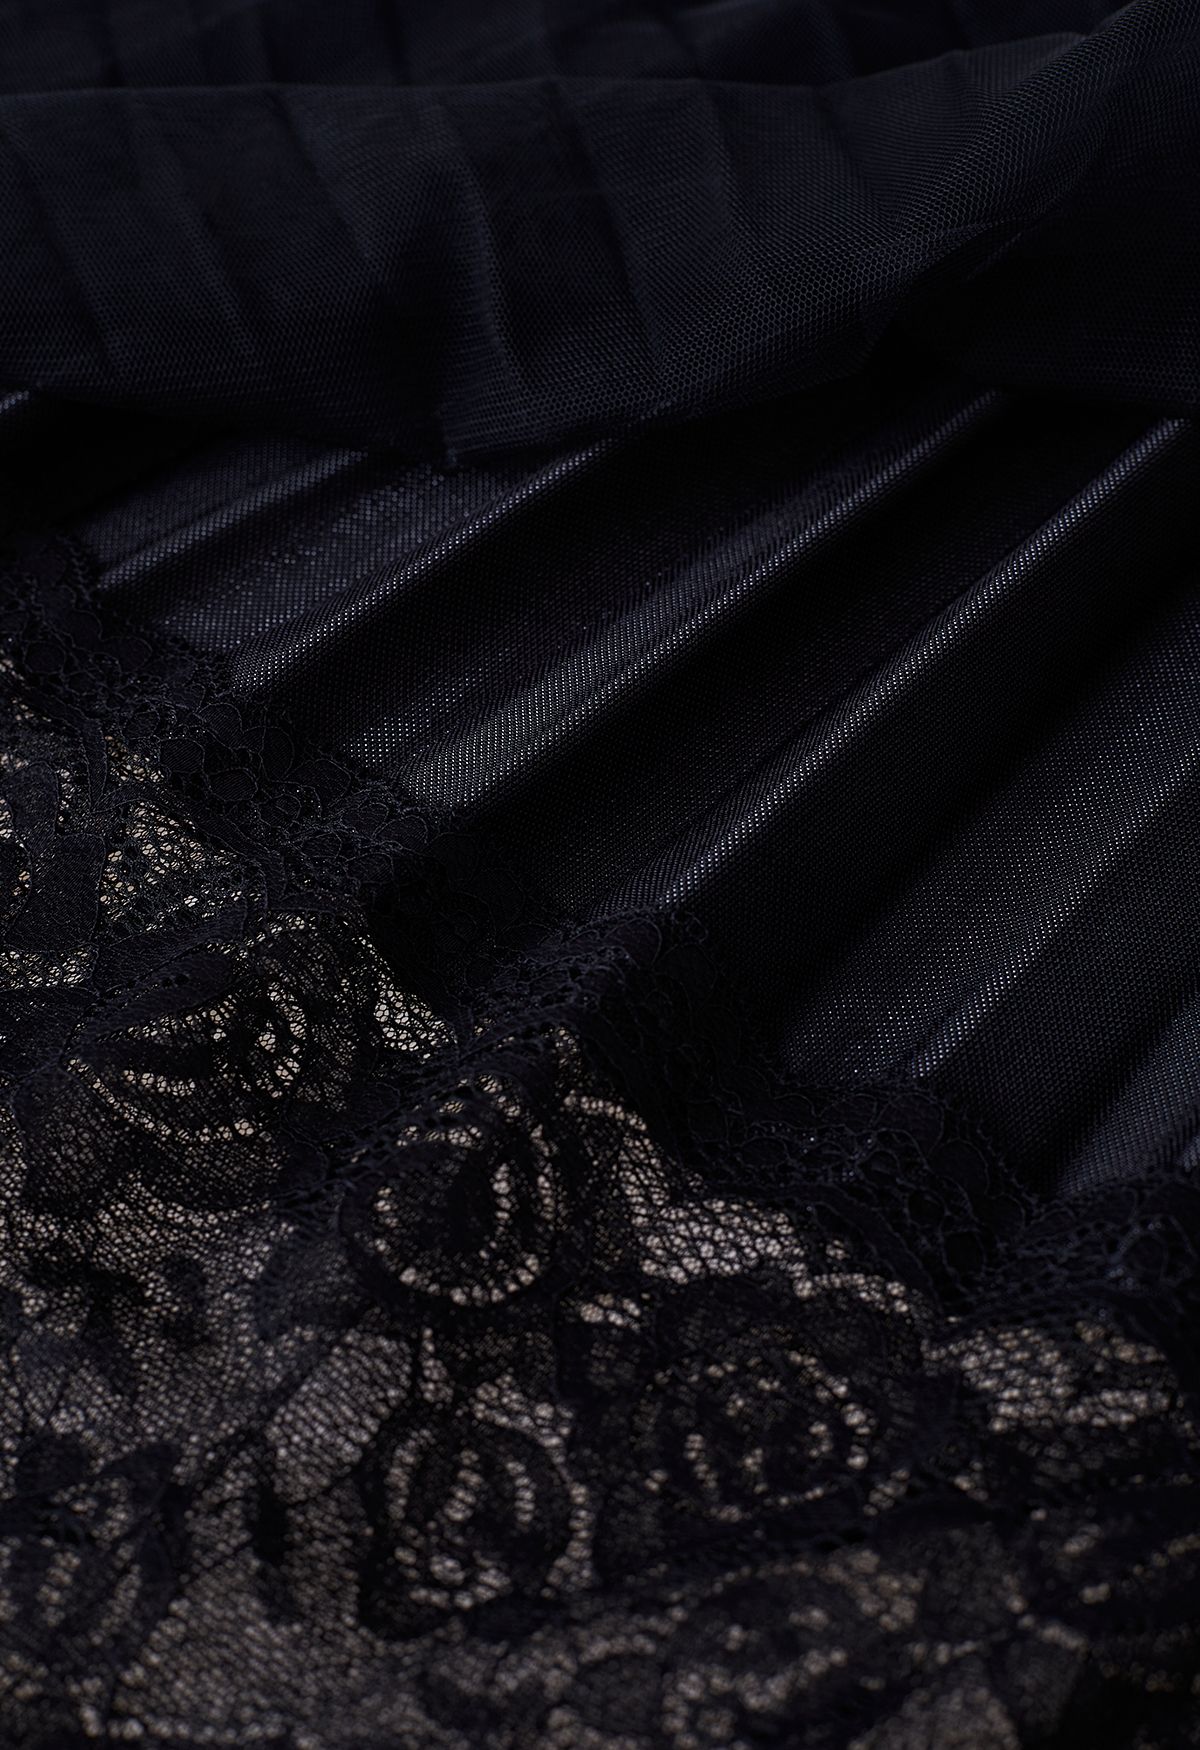 Lace Hem Double-Layered Mesh Midi Skirt in Black